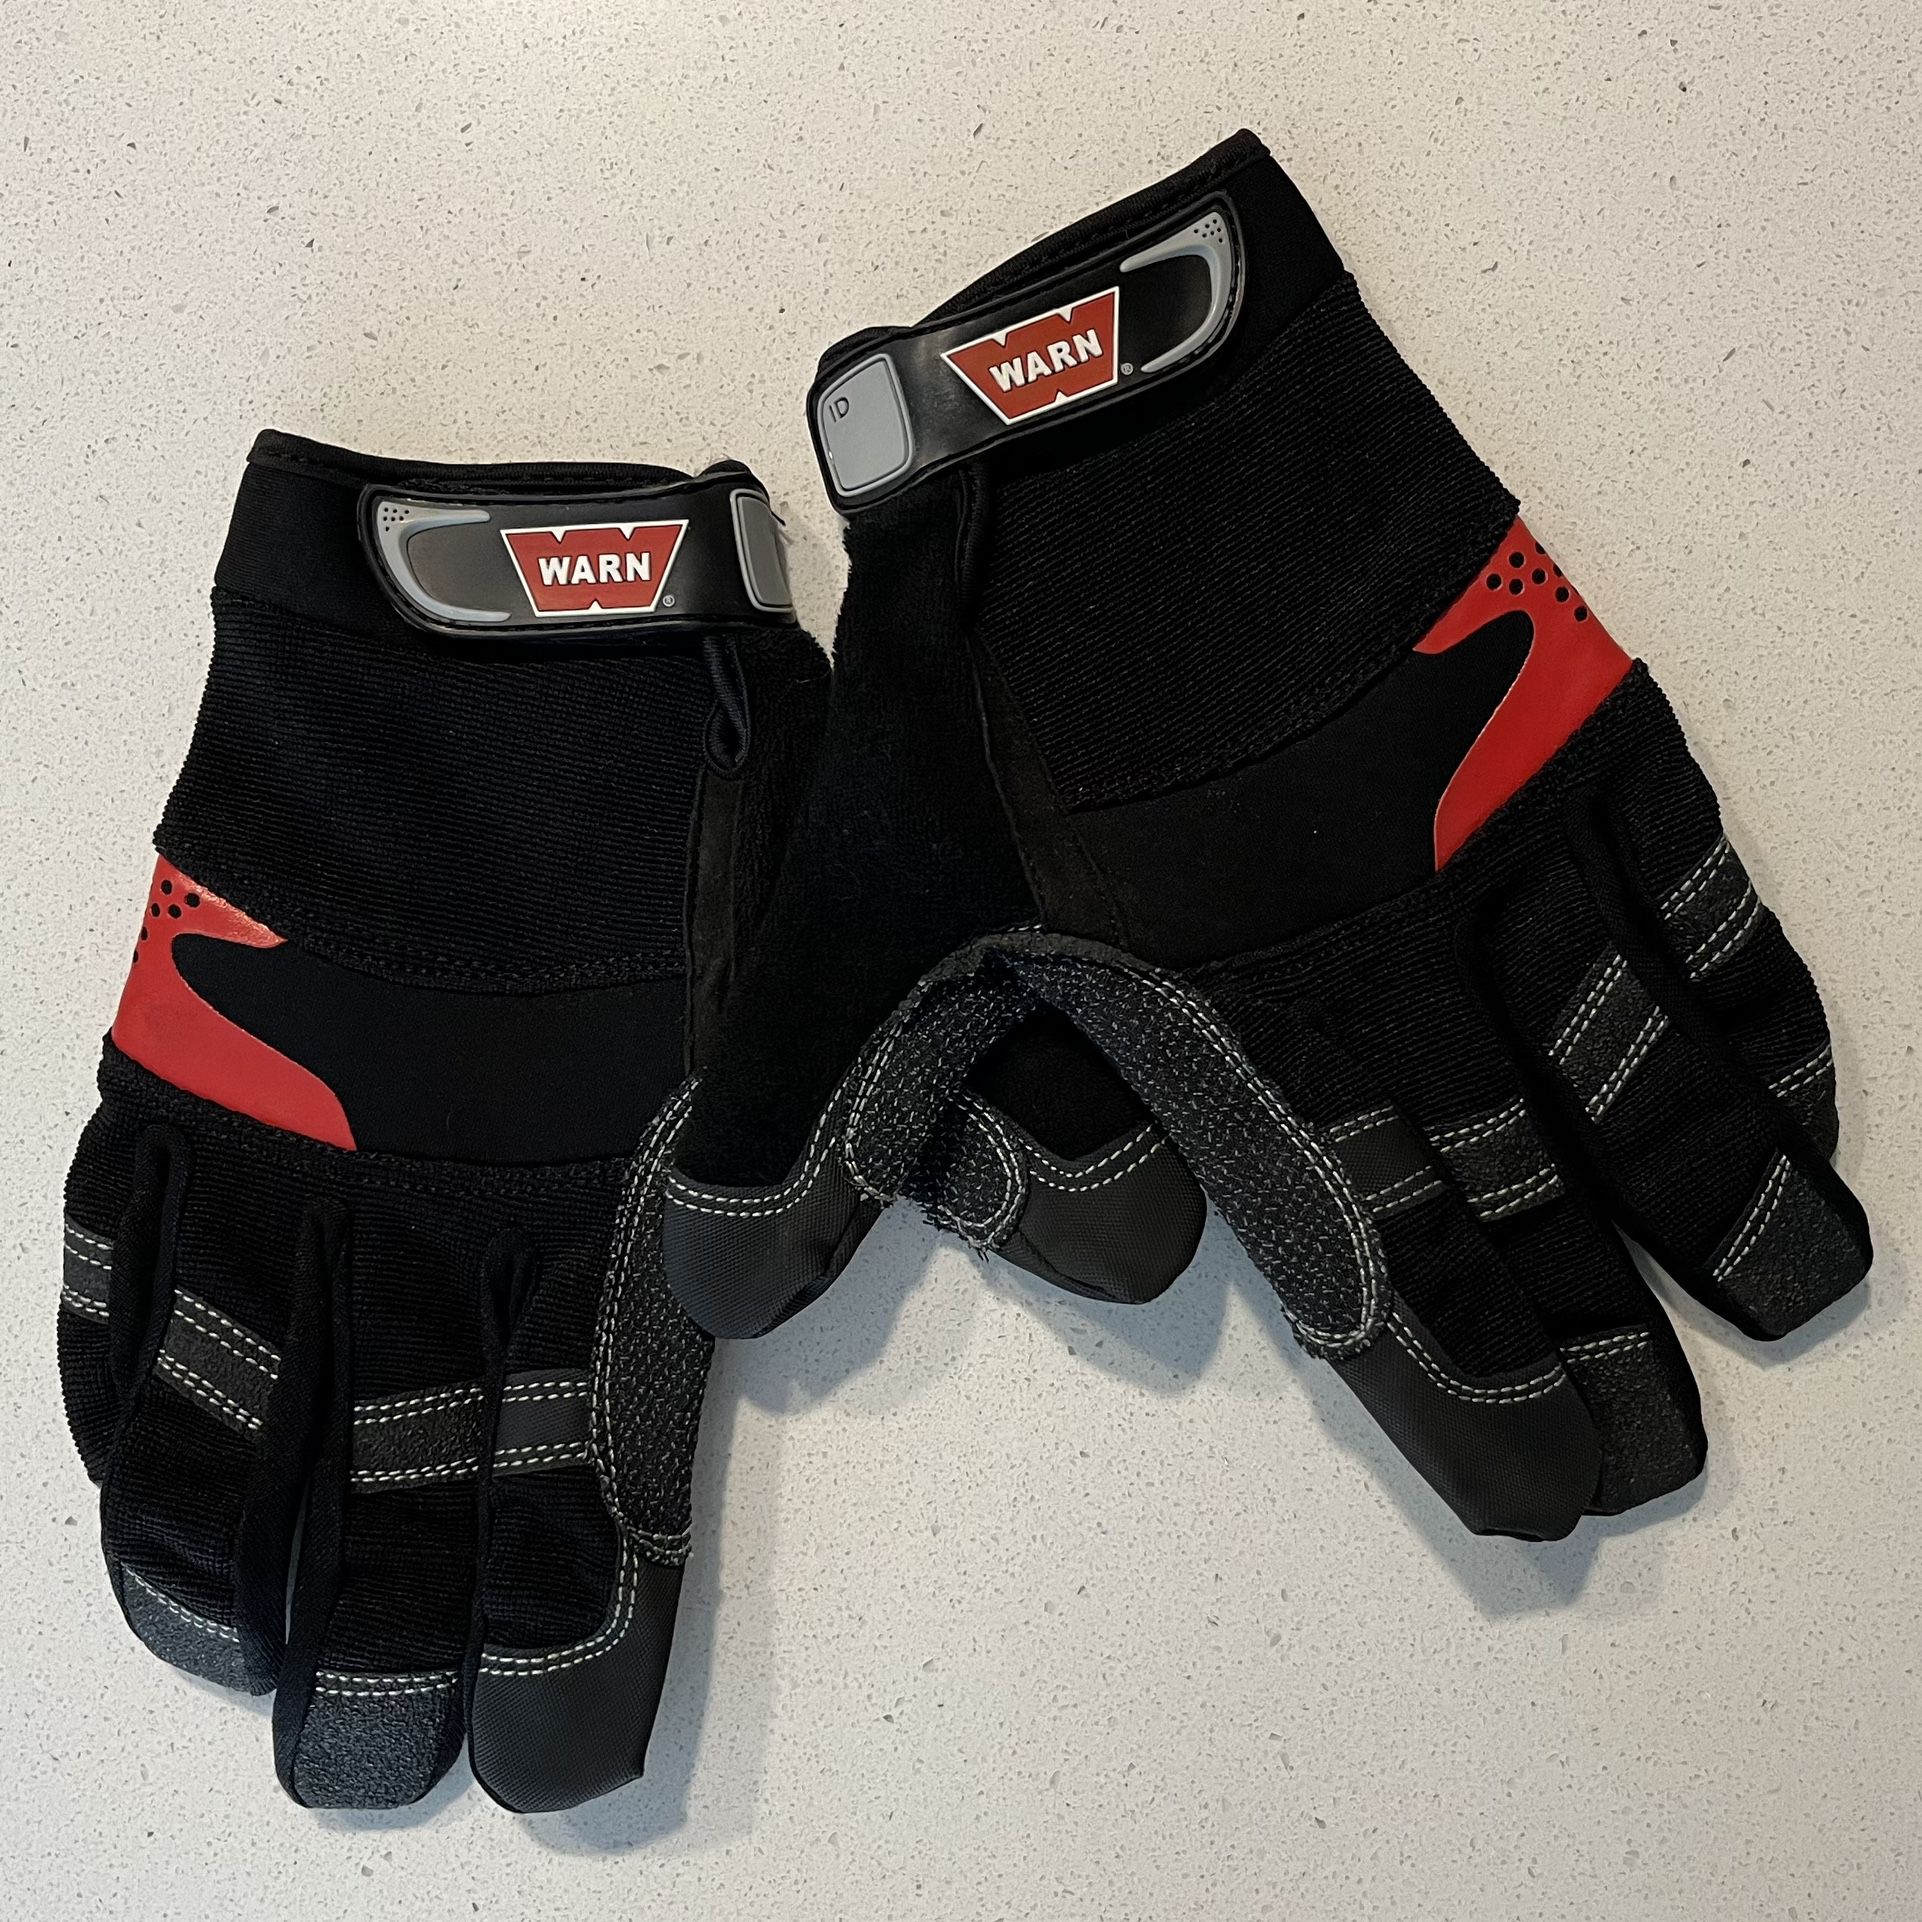 Warn Winching Gloves - Size XL - 88891 Open Package/New